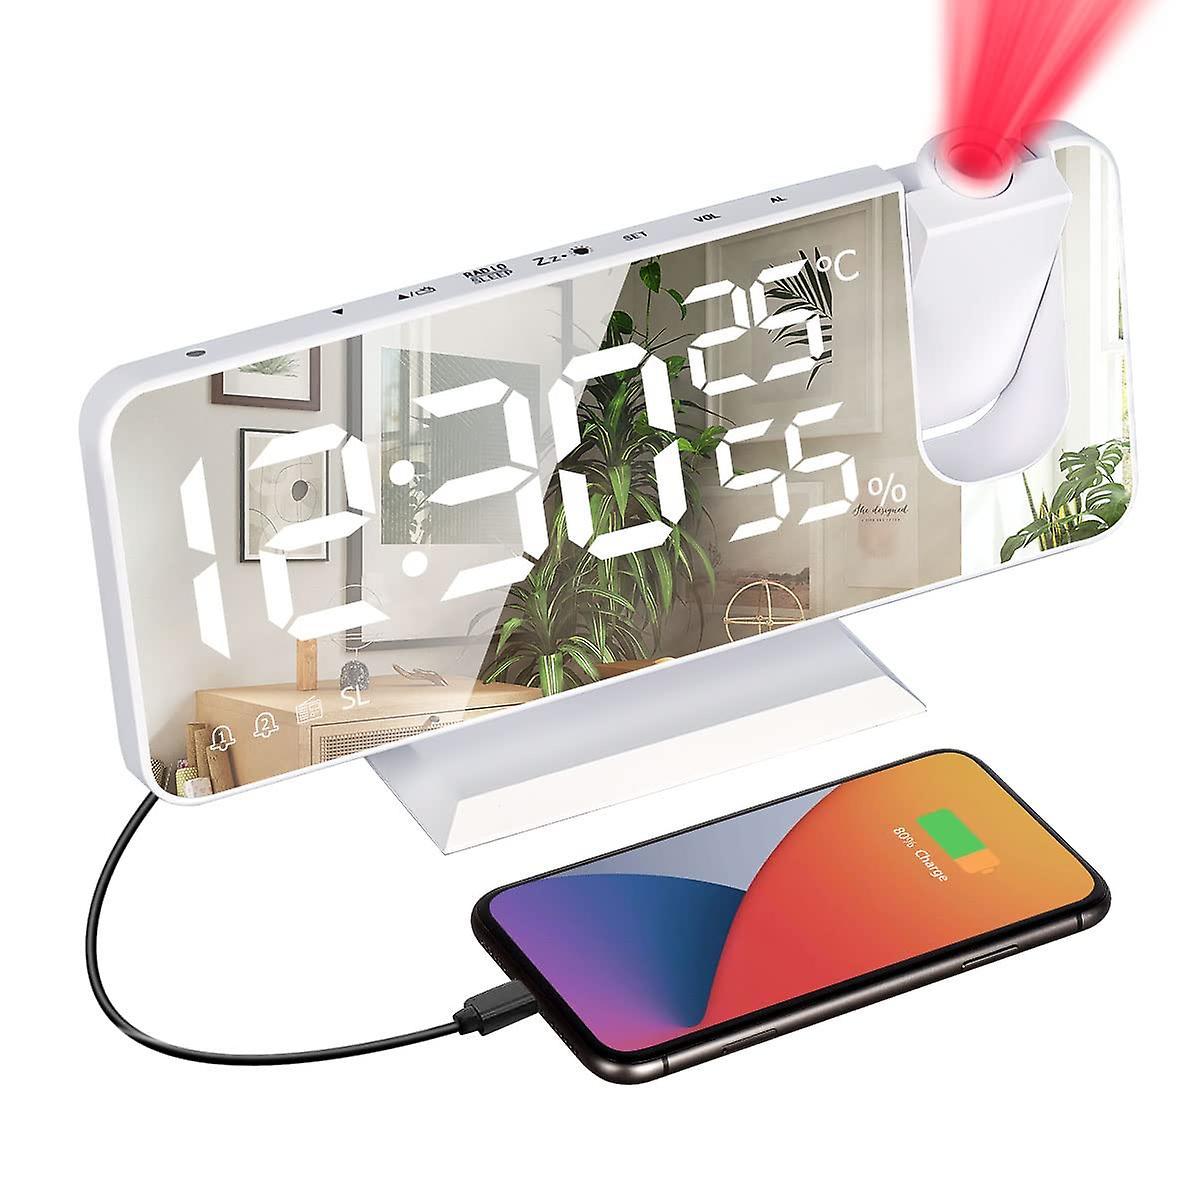 Projection Alarm Clock Digital Radio Alarm Clock With Mirror Surface Usb Charger - $35.95